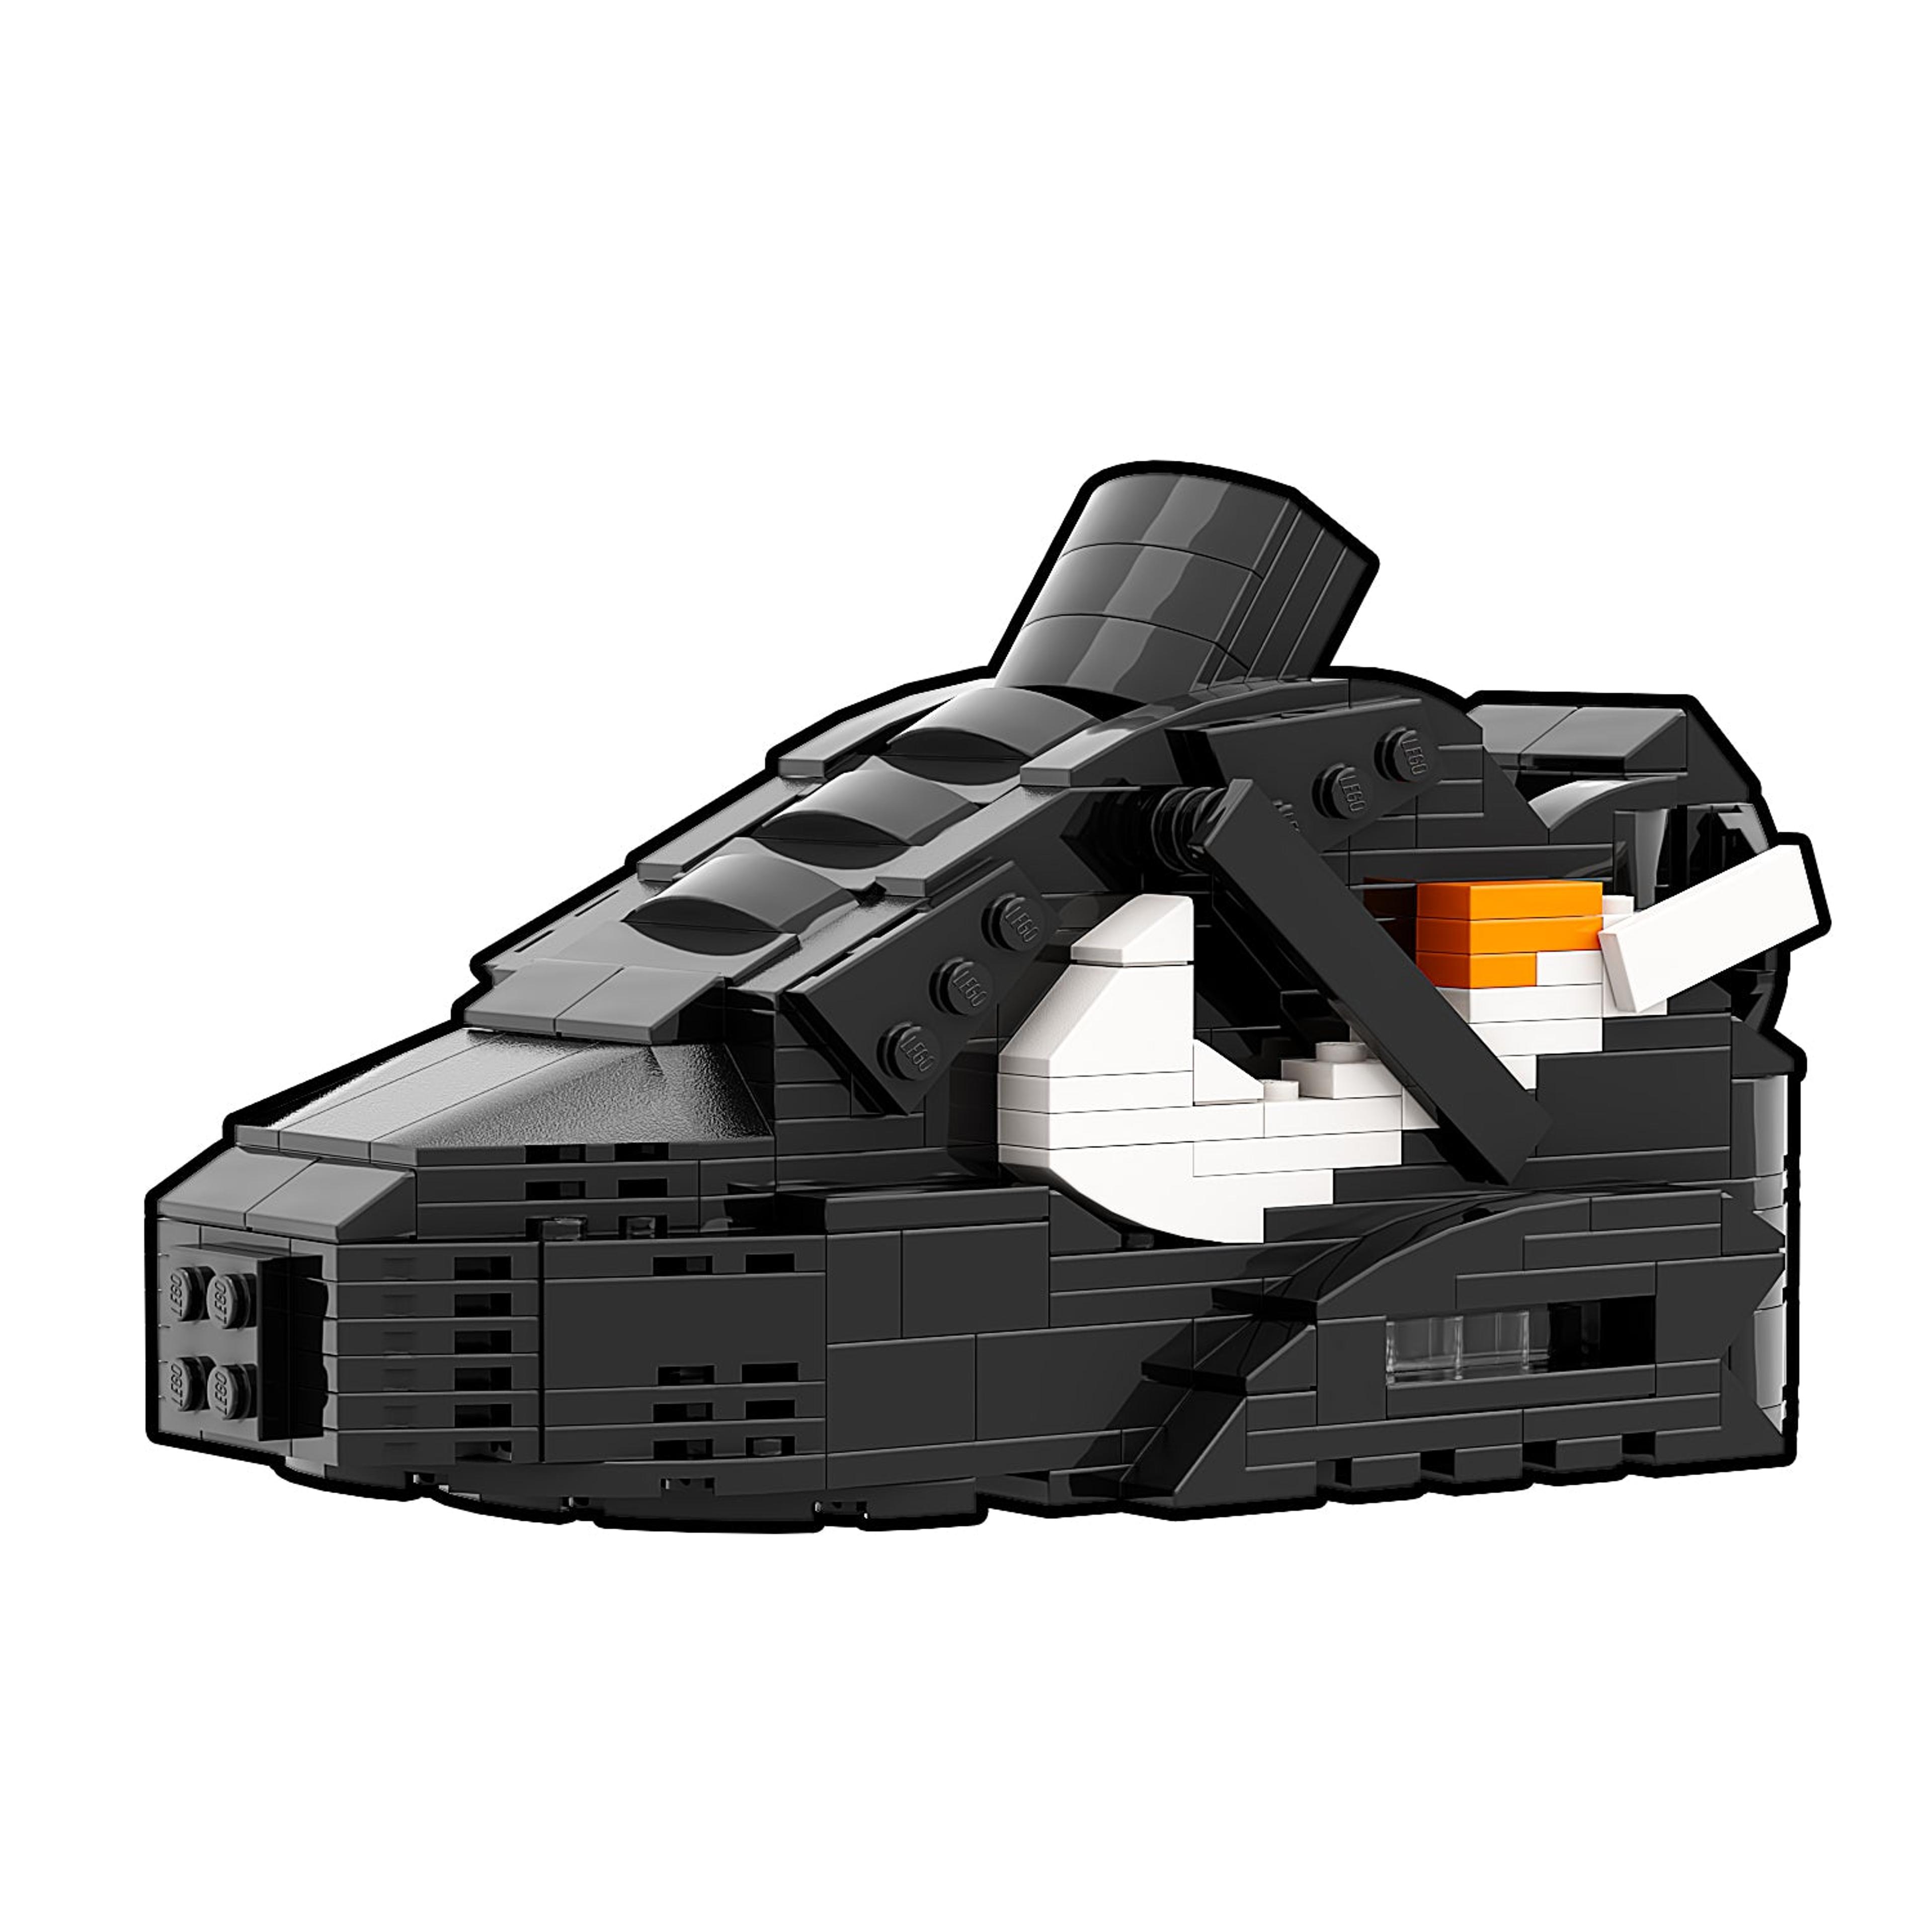 Alternate View 2 of REGULAR Air Max 90 "Off-White Black" Sneaker Bricks with Mini Fi